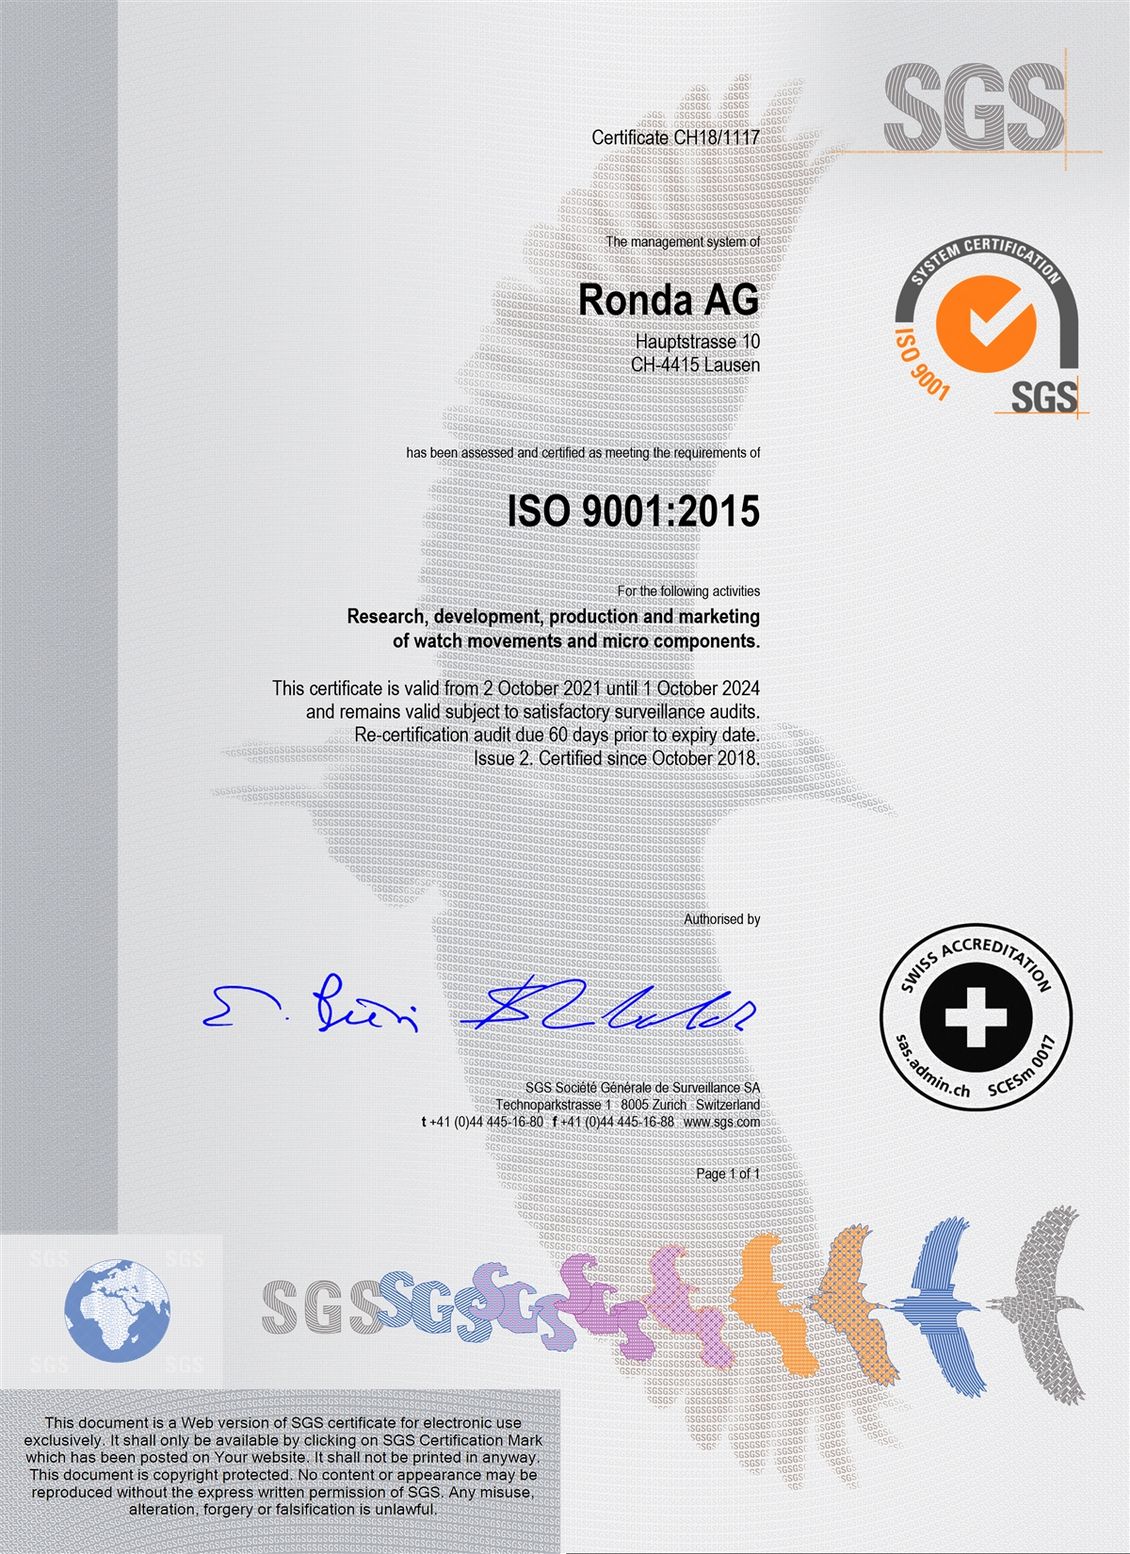 [Translate to English:] ISO 9001